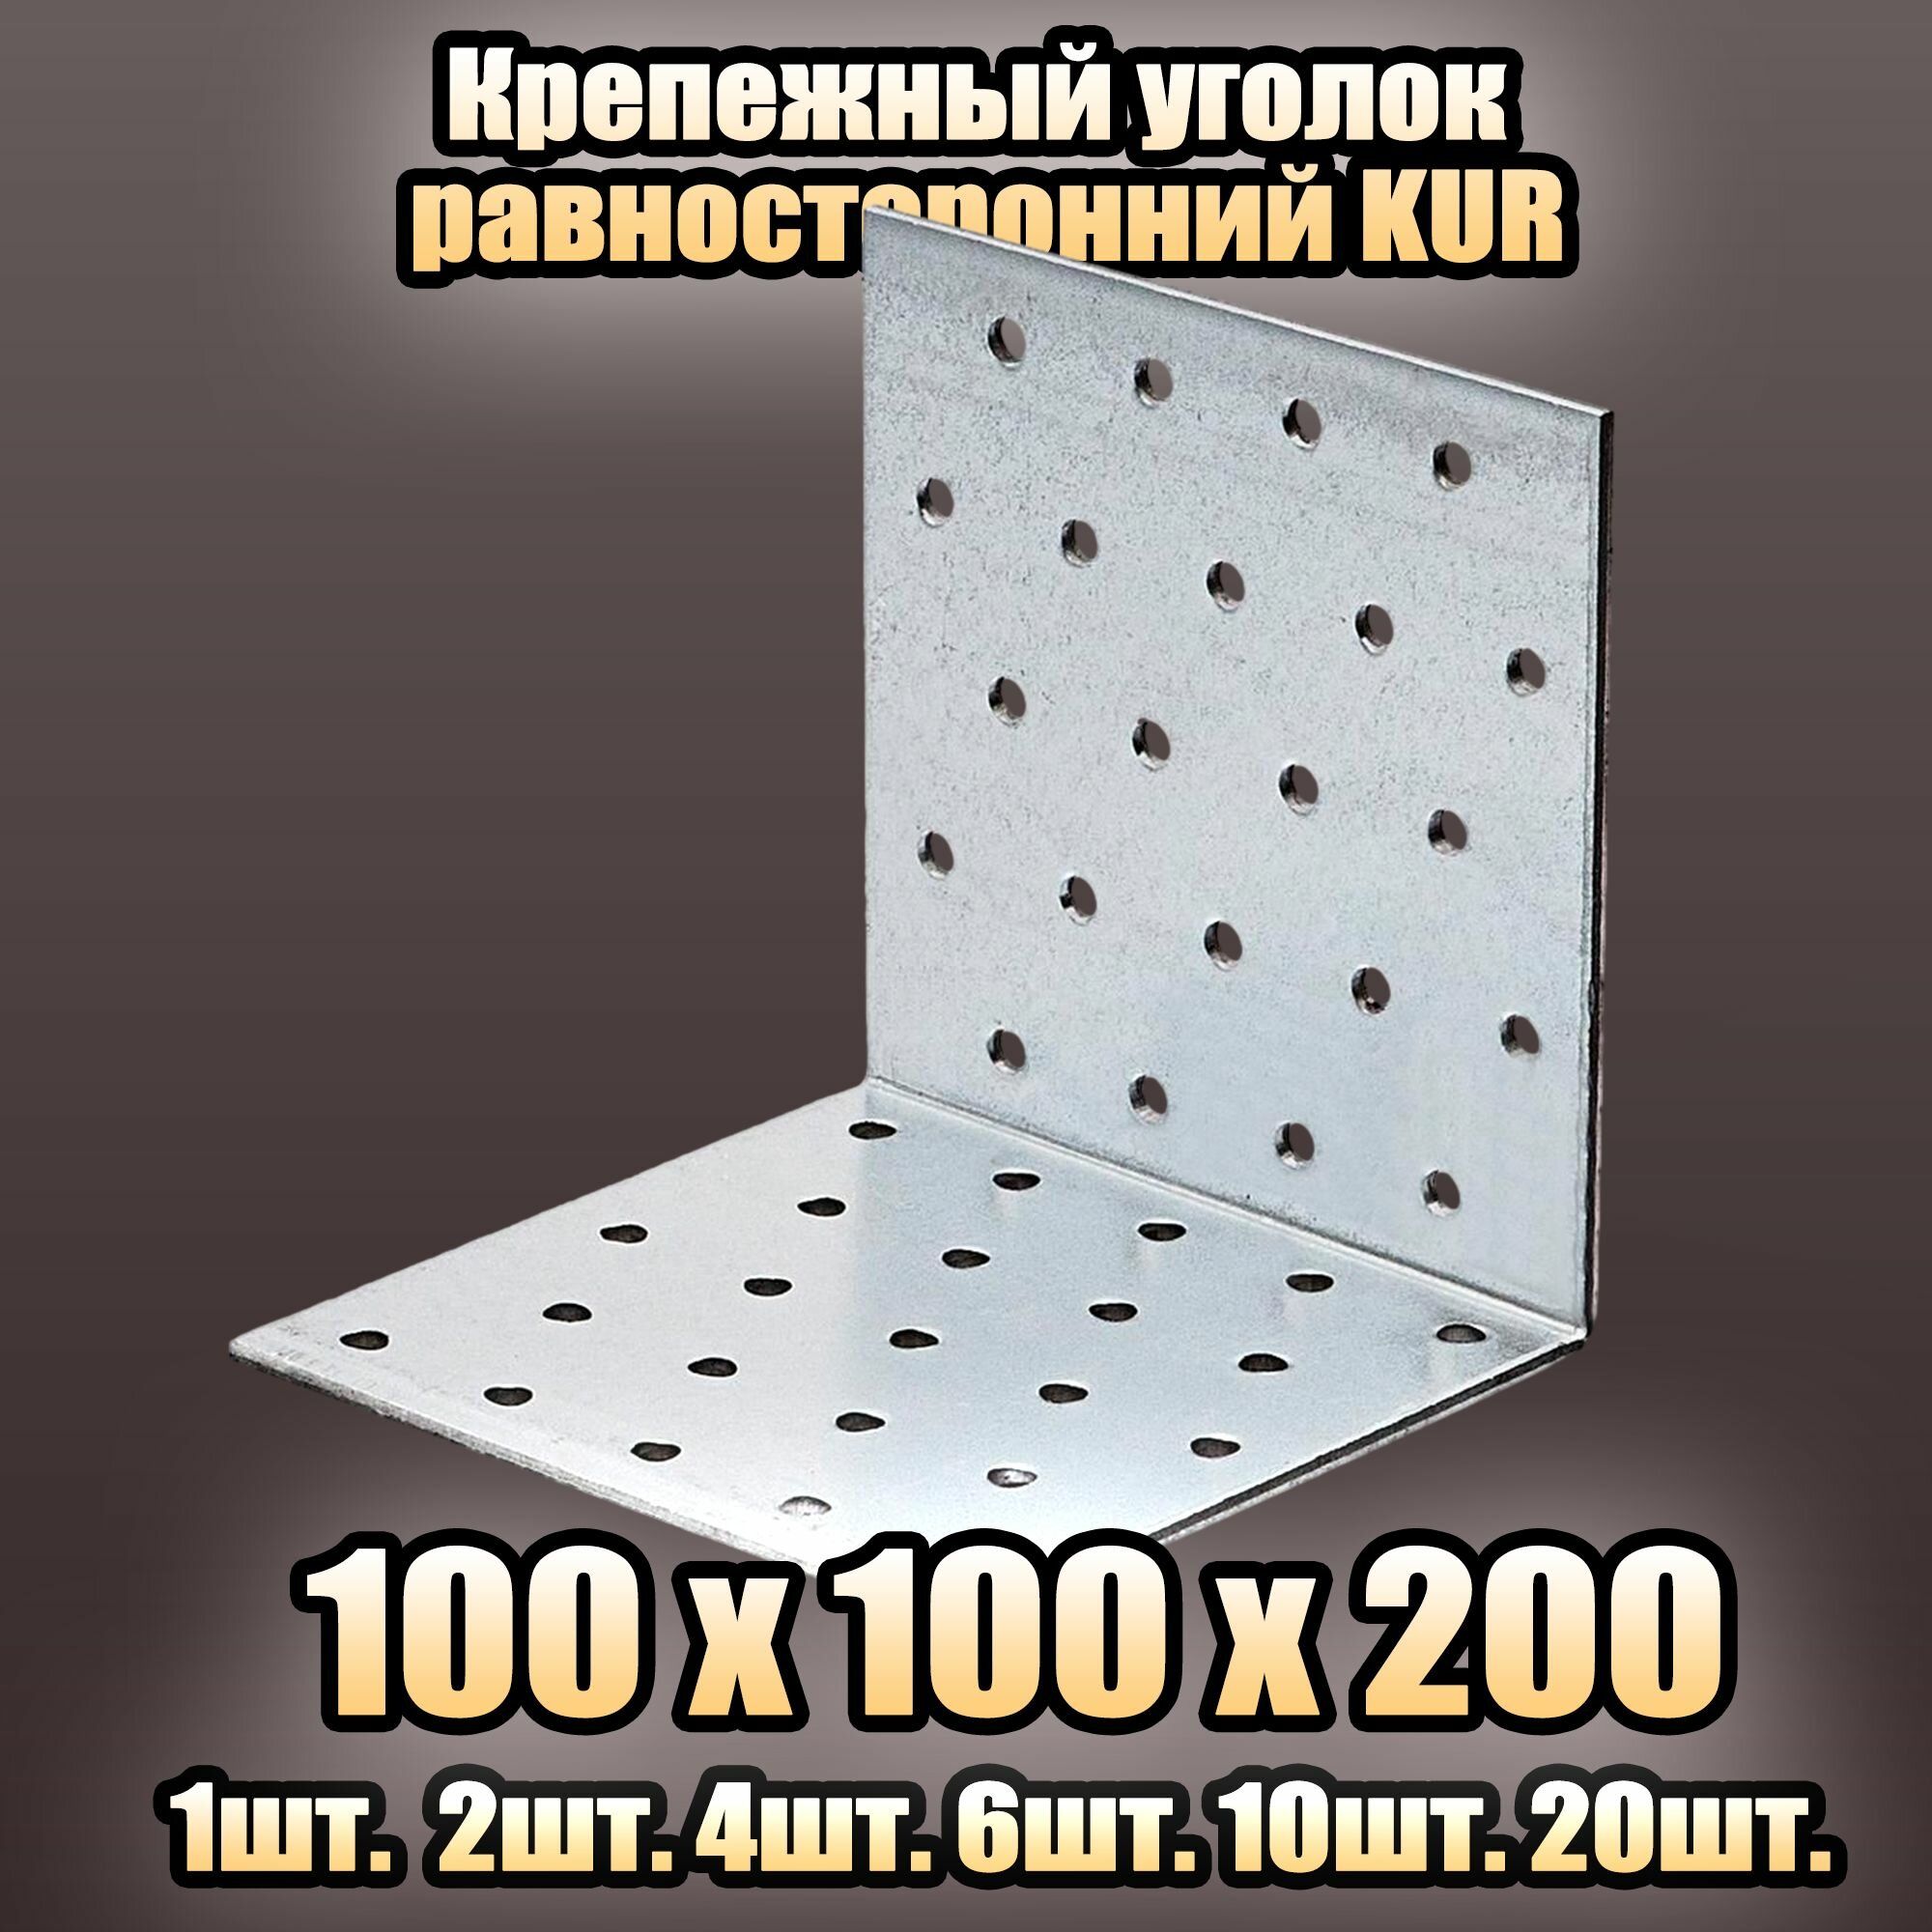 Крепежный уголок равносторонний KUR 100x100х200 - 2 шт